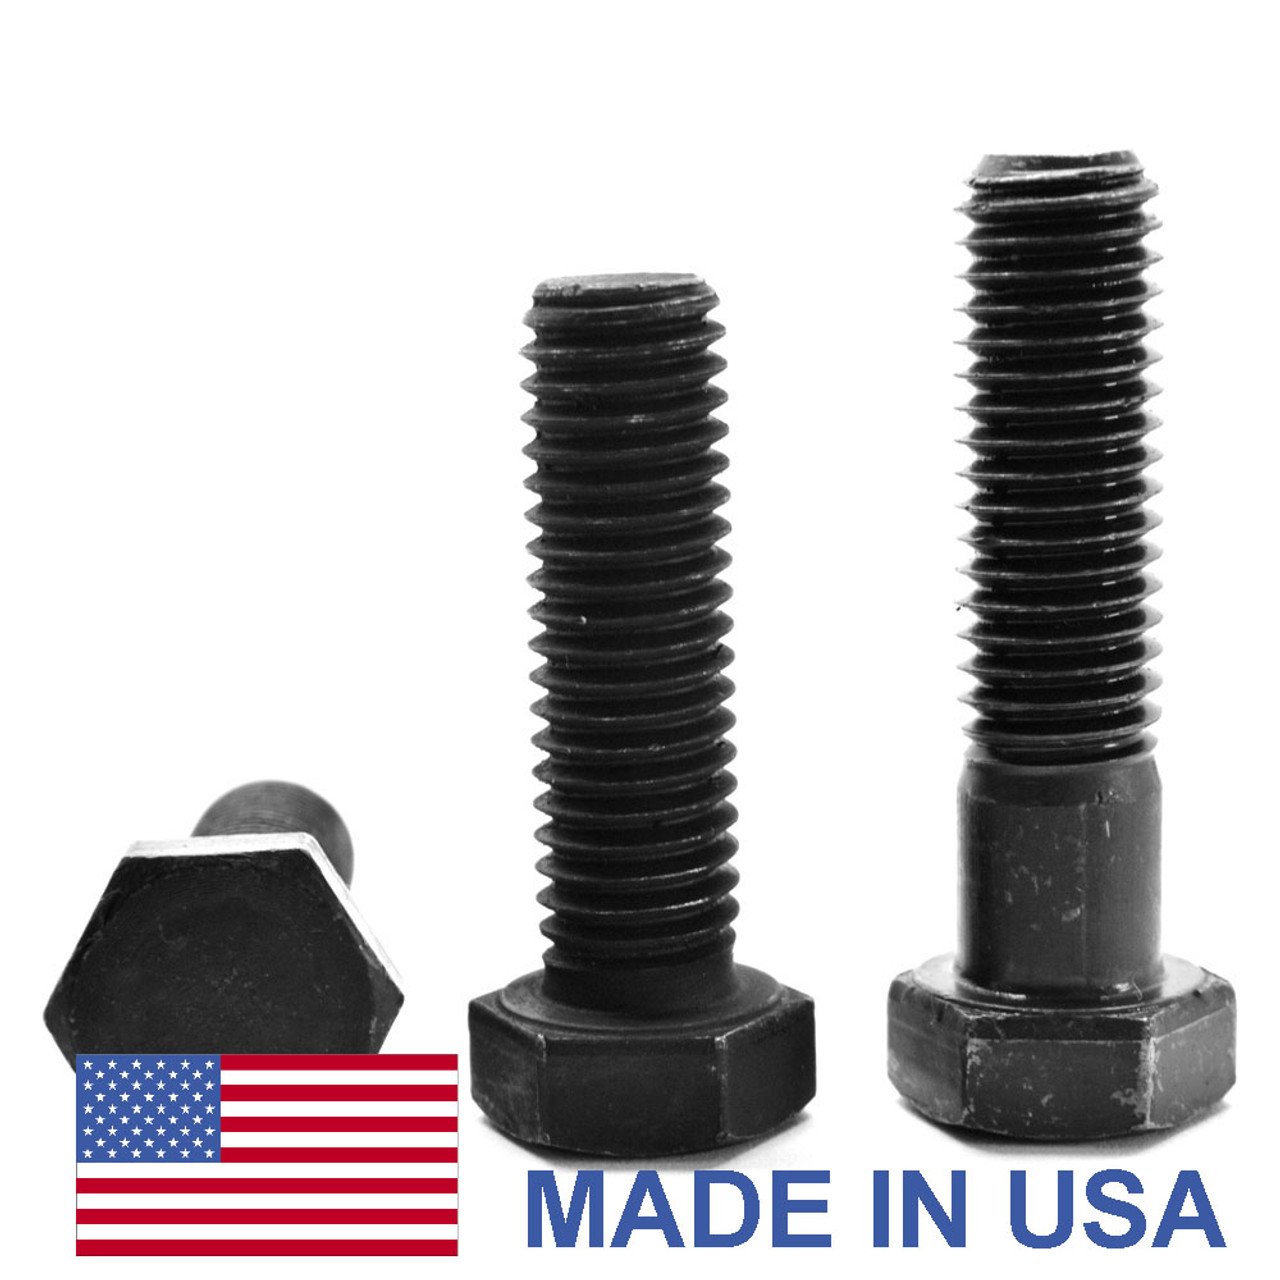 5/16"-18 x 2 1/4" (PT) Coarse Thread Grade 8 Hex Cap Screw (Bolt) - USA Alloy Steel Black Oxide